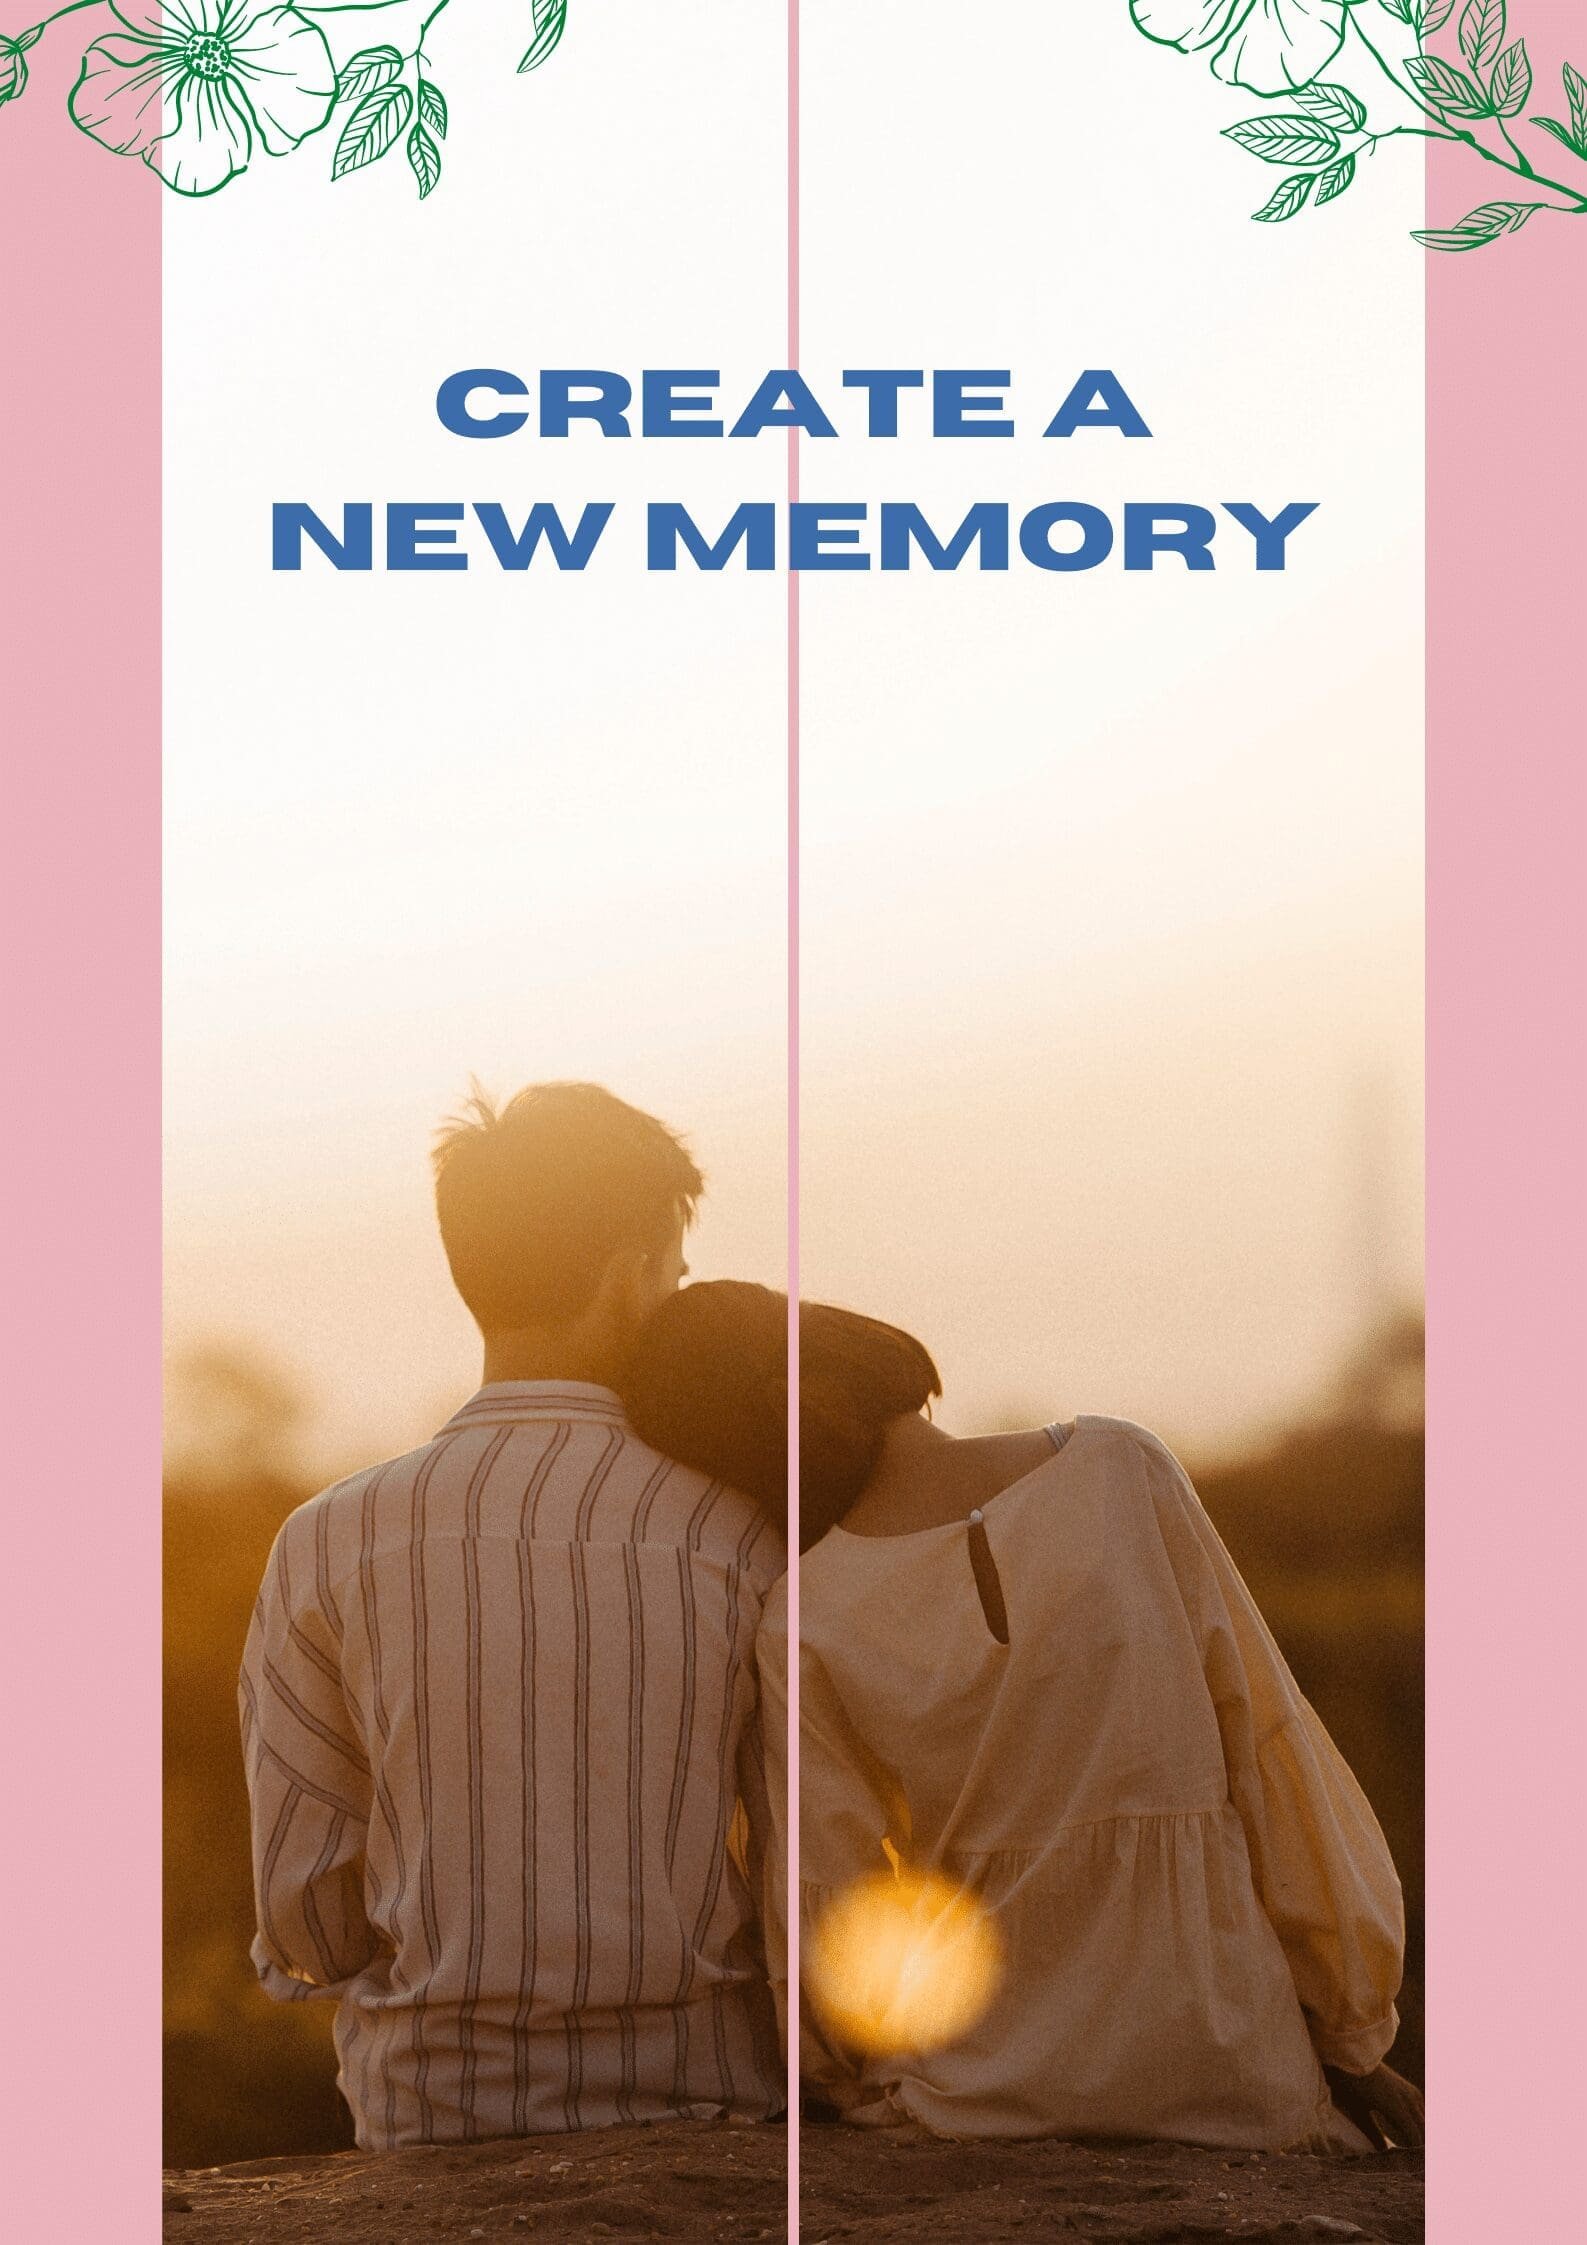 Create-a-new-memory